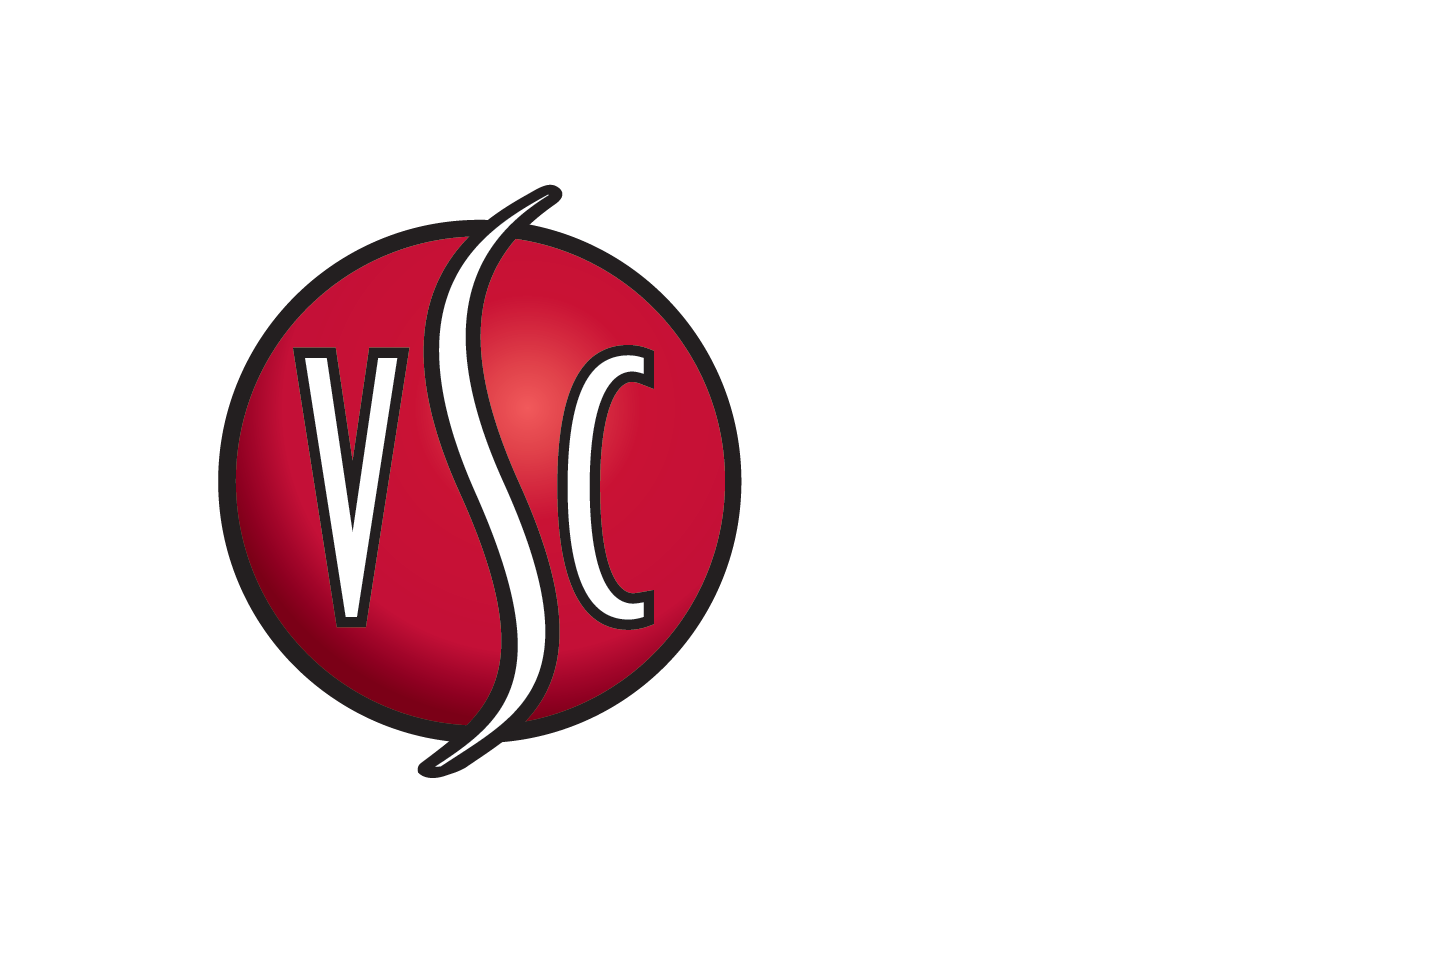 Virginia Stage Company